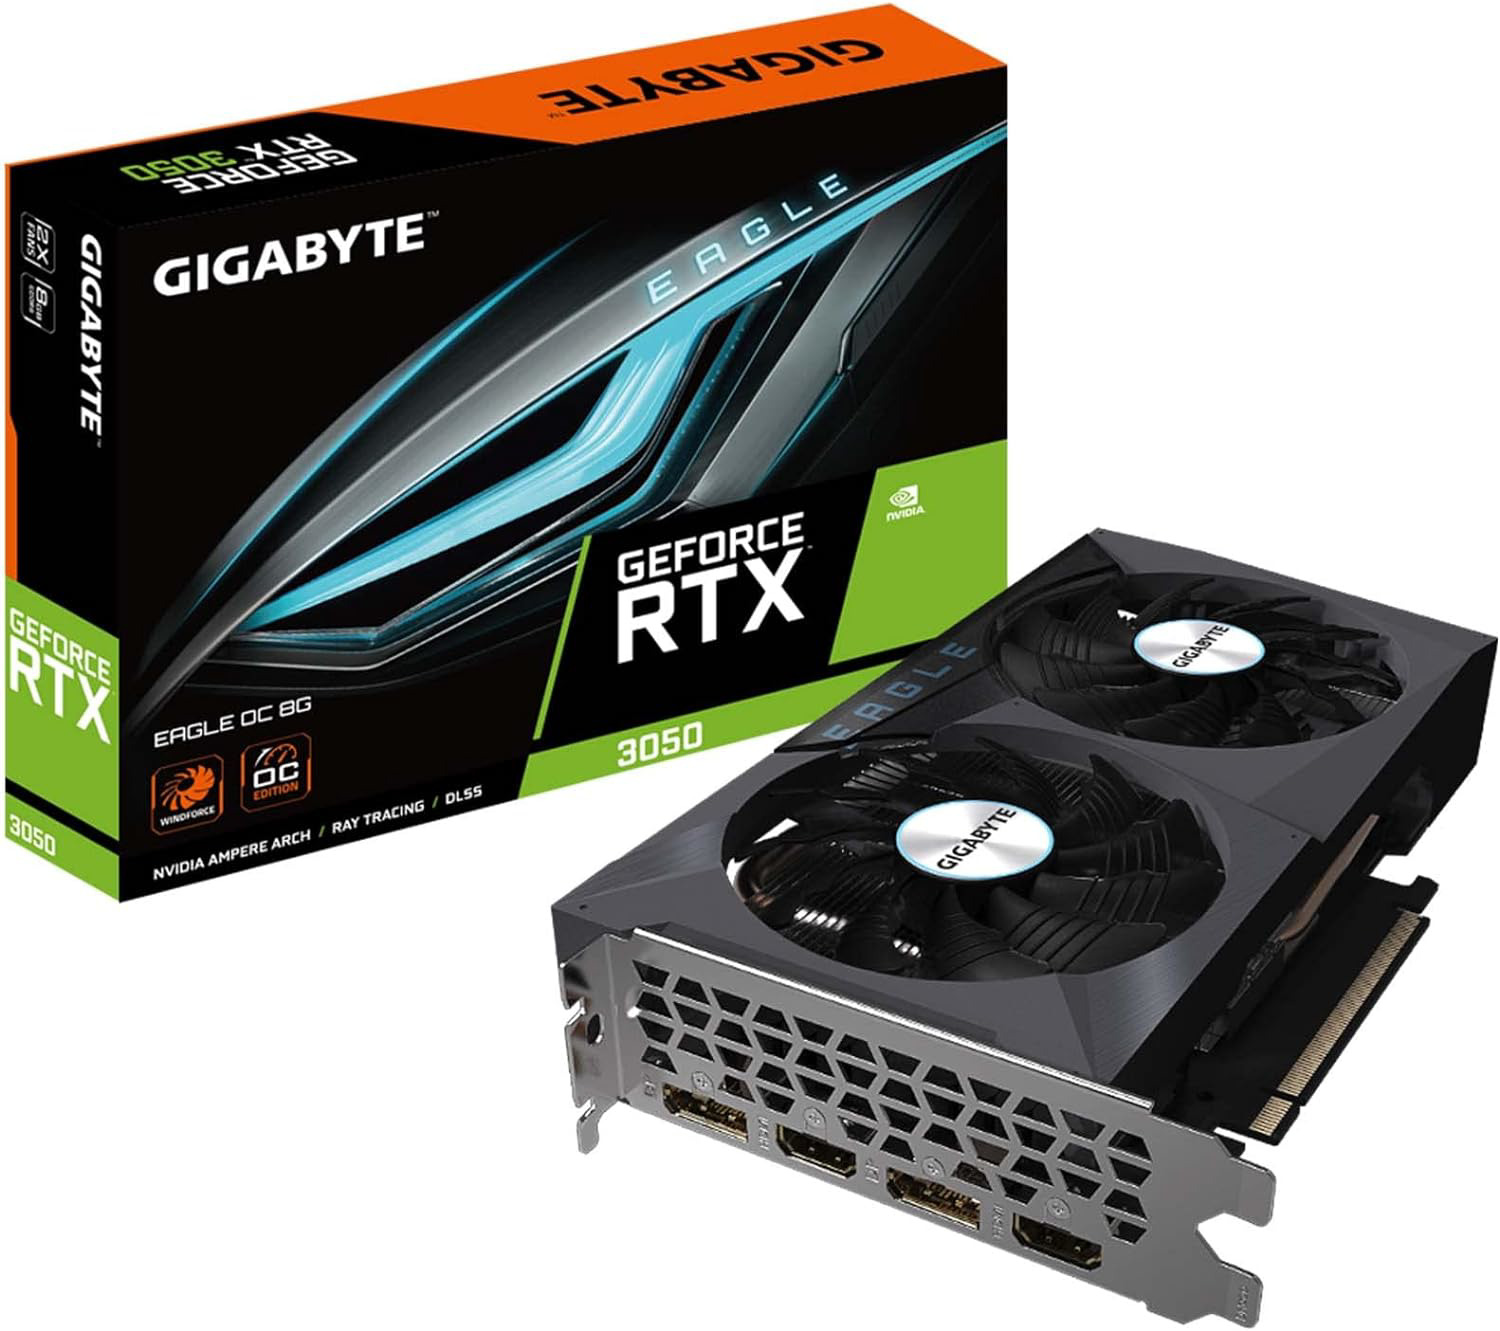 GIGABYTE GeForce RTX 3050 Eagle OC 8G Graphics Card, 2X WINDFORCE Fans, 8GB 128-